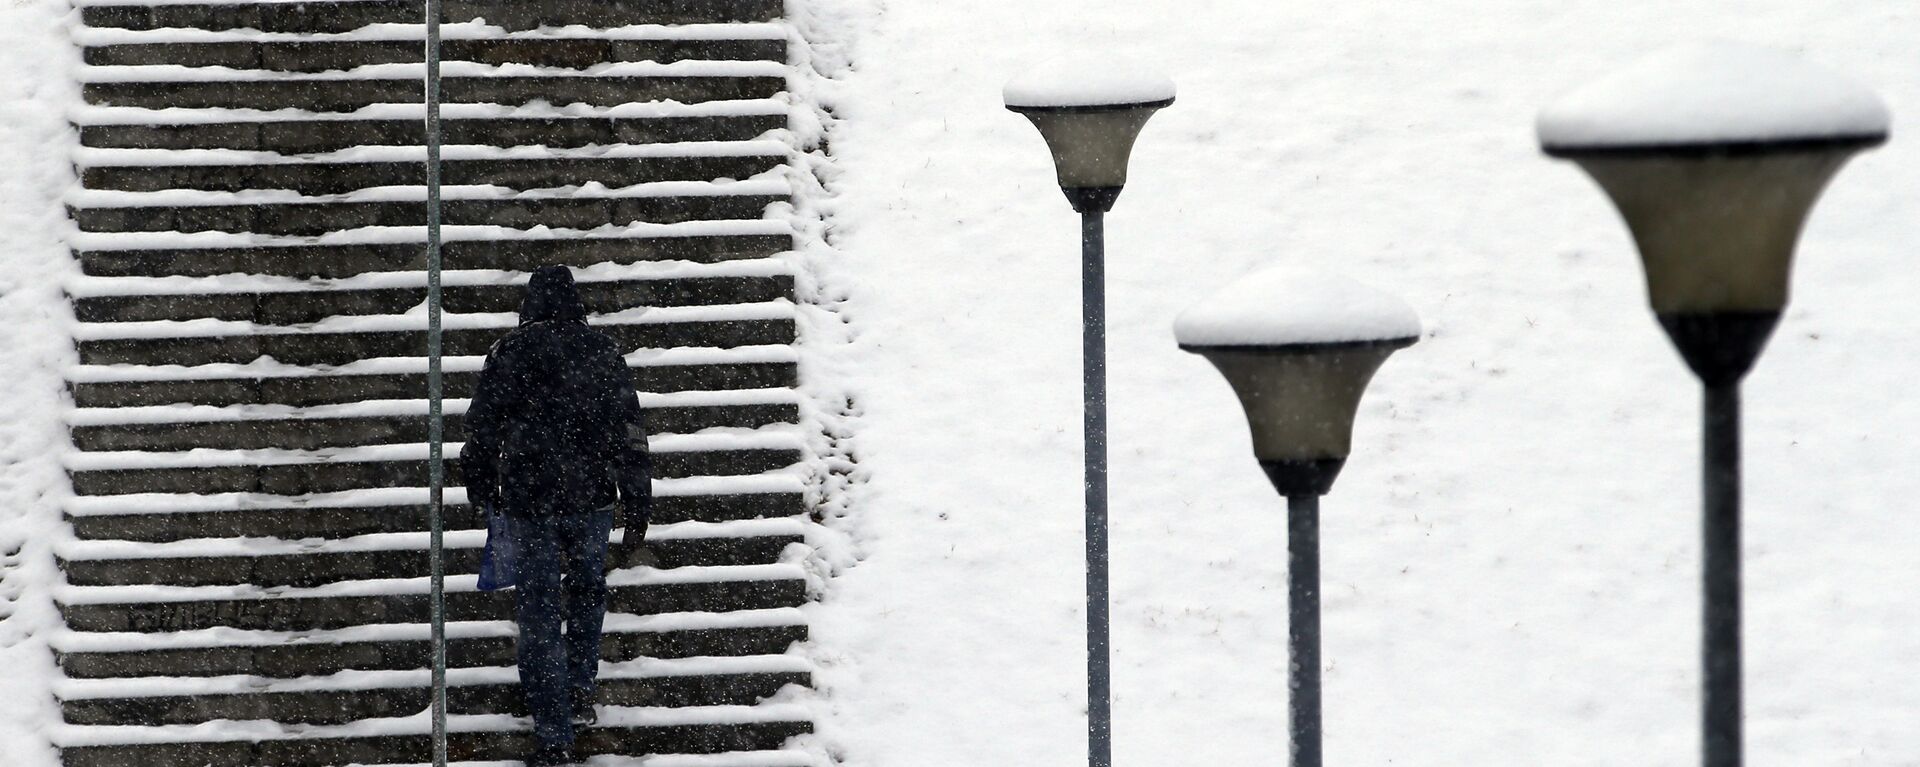 Čovek se penje uz stepenice u parku pokrivenom snegom u Beogradu - Sputnik Srbija, 1920, 08.11.2021